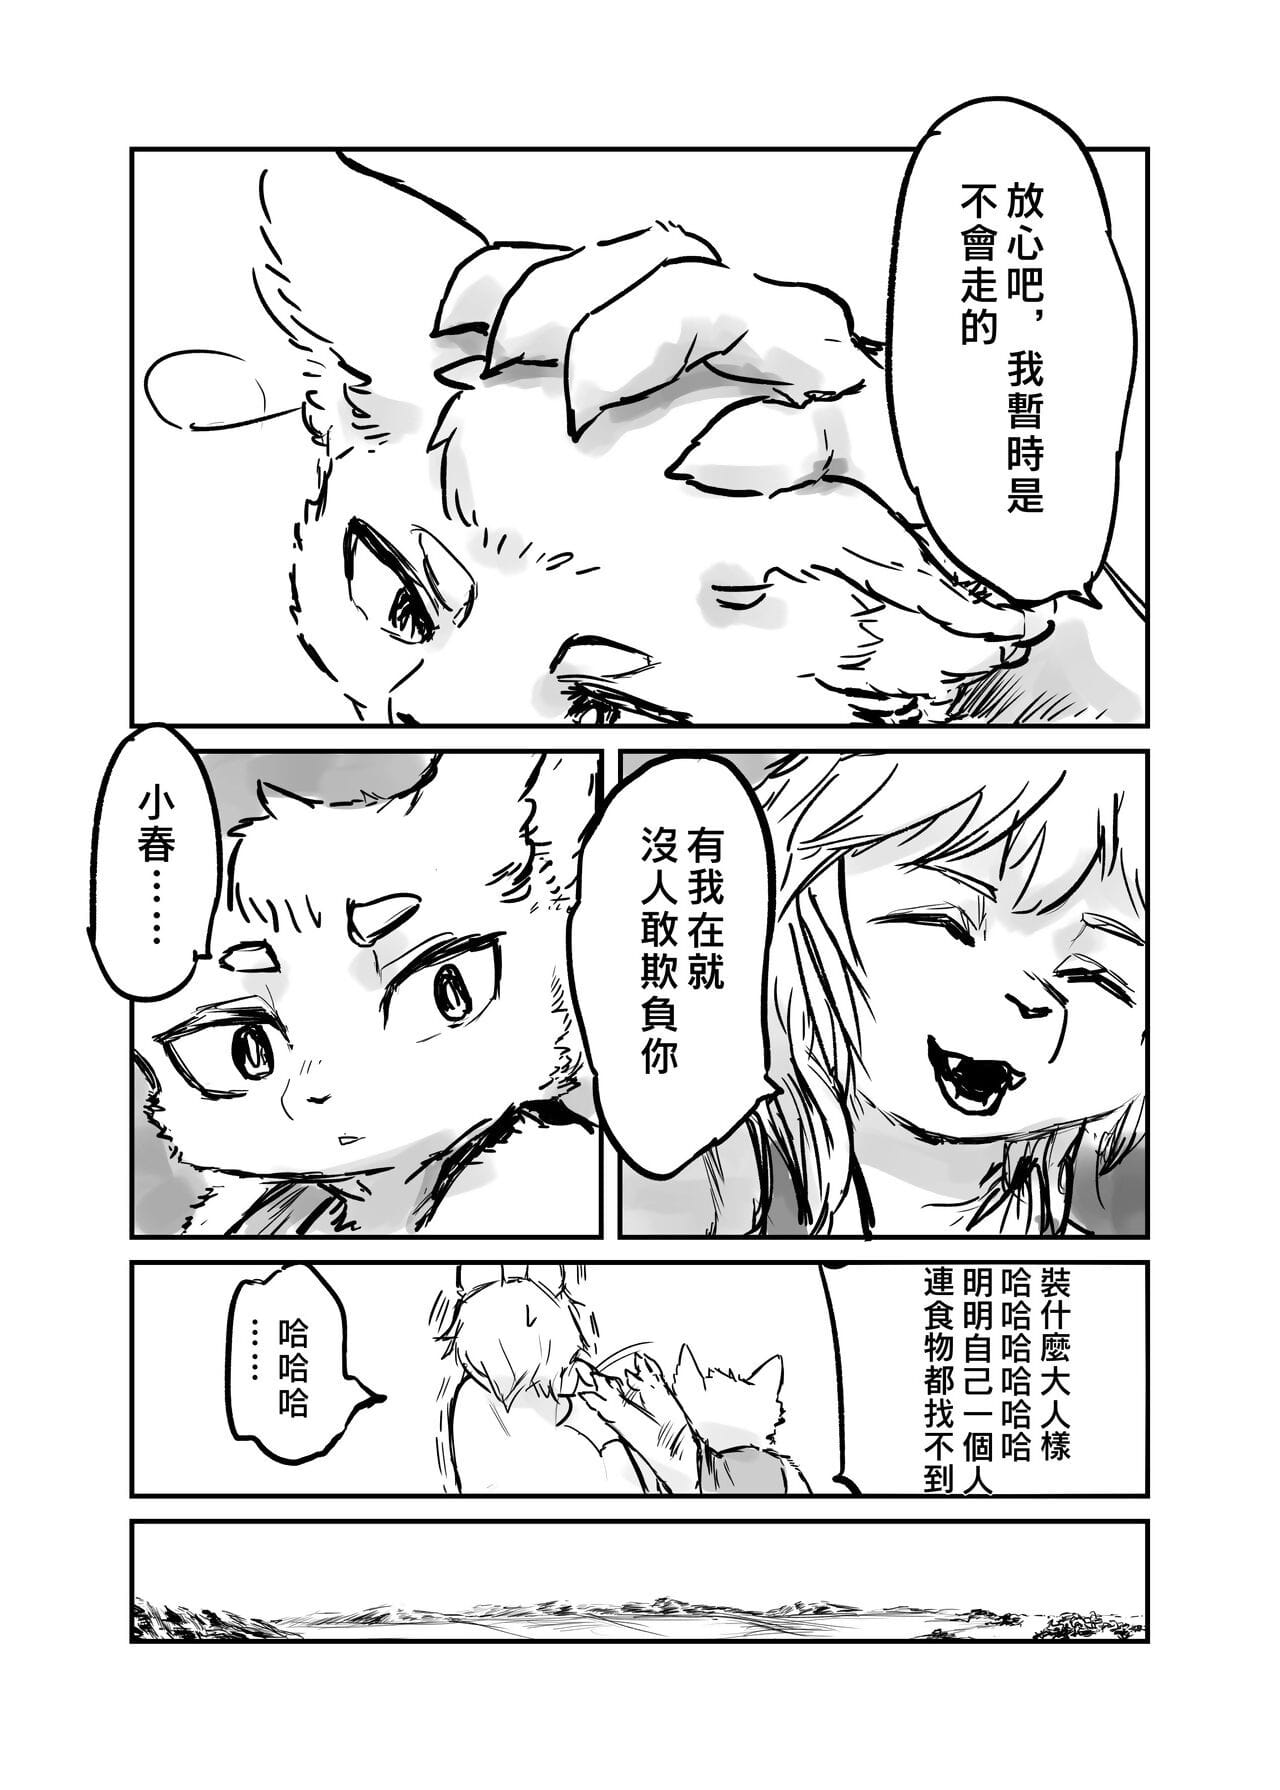 （the เยี่ยม 他乡之人 by：鬼流 page 1